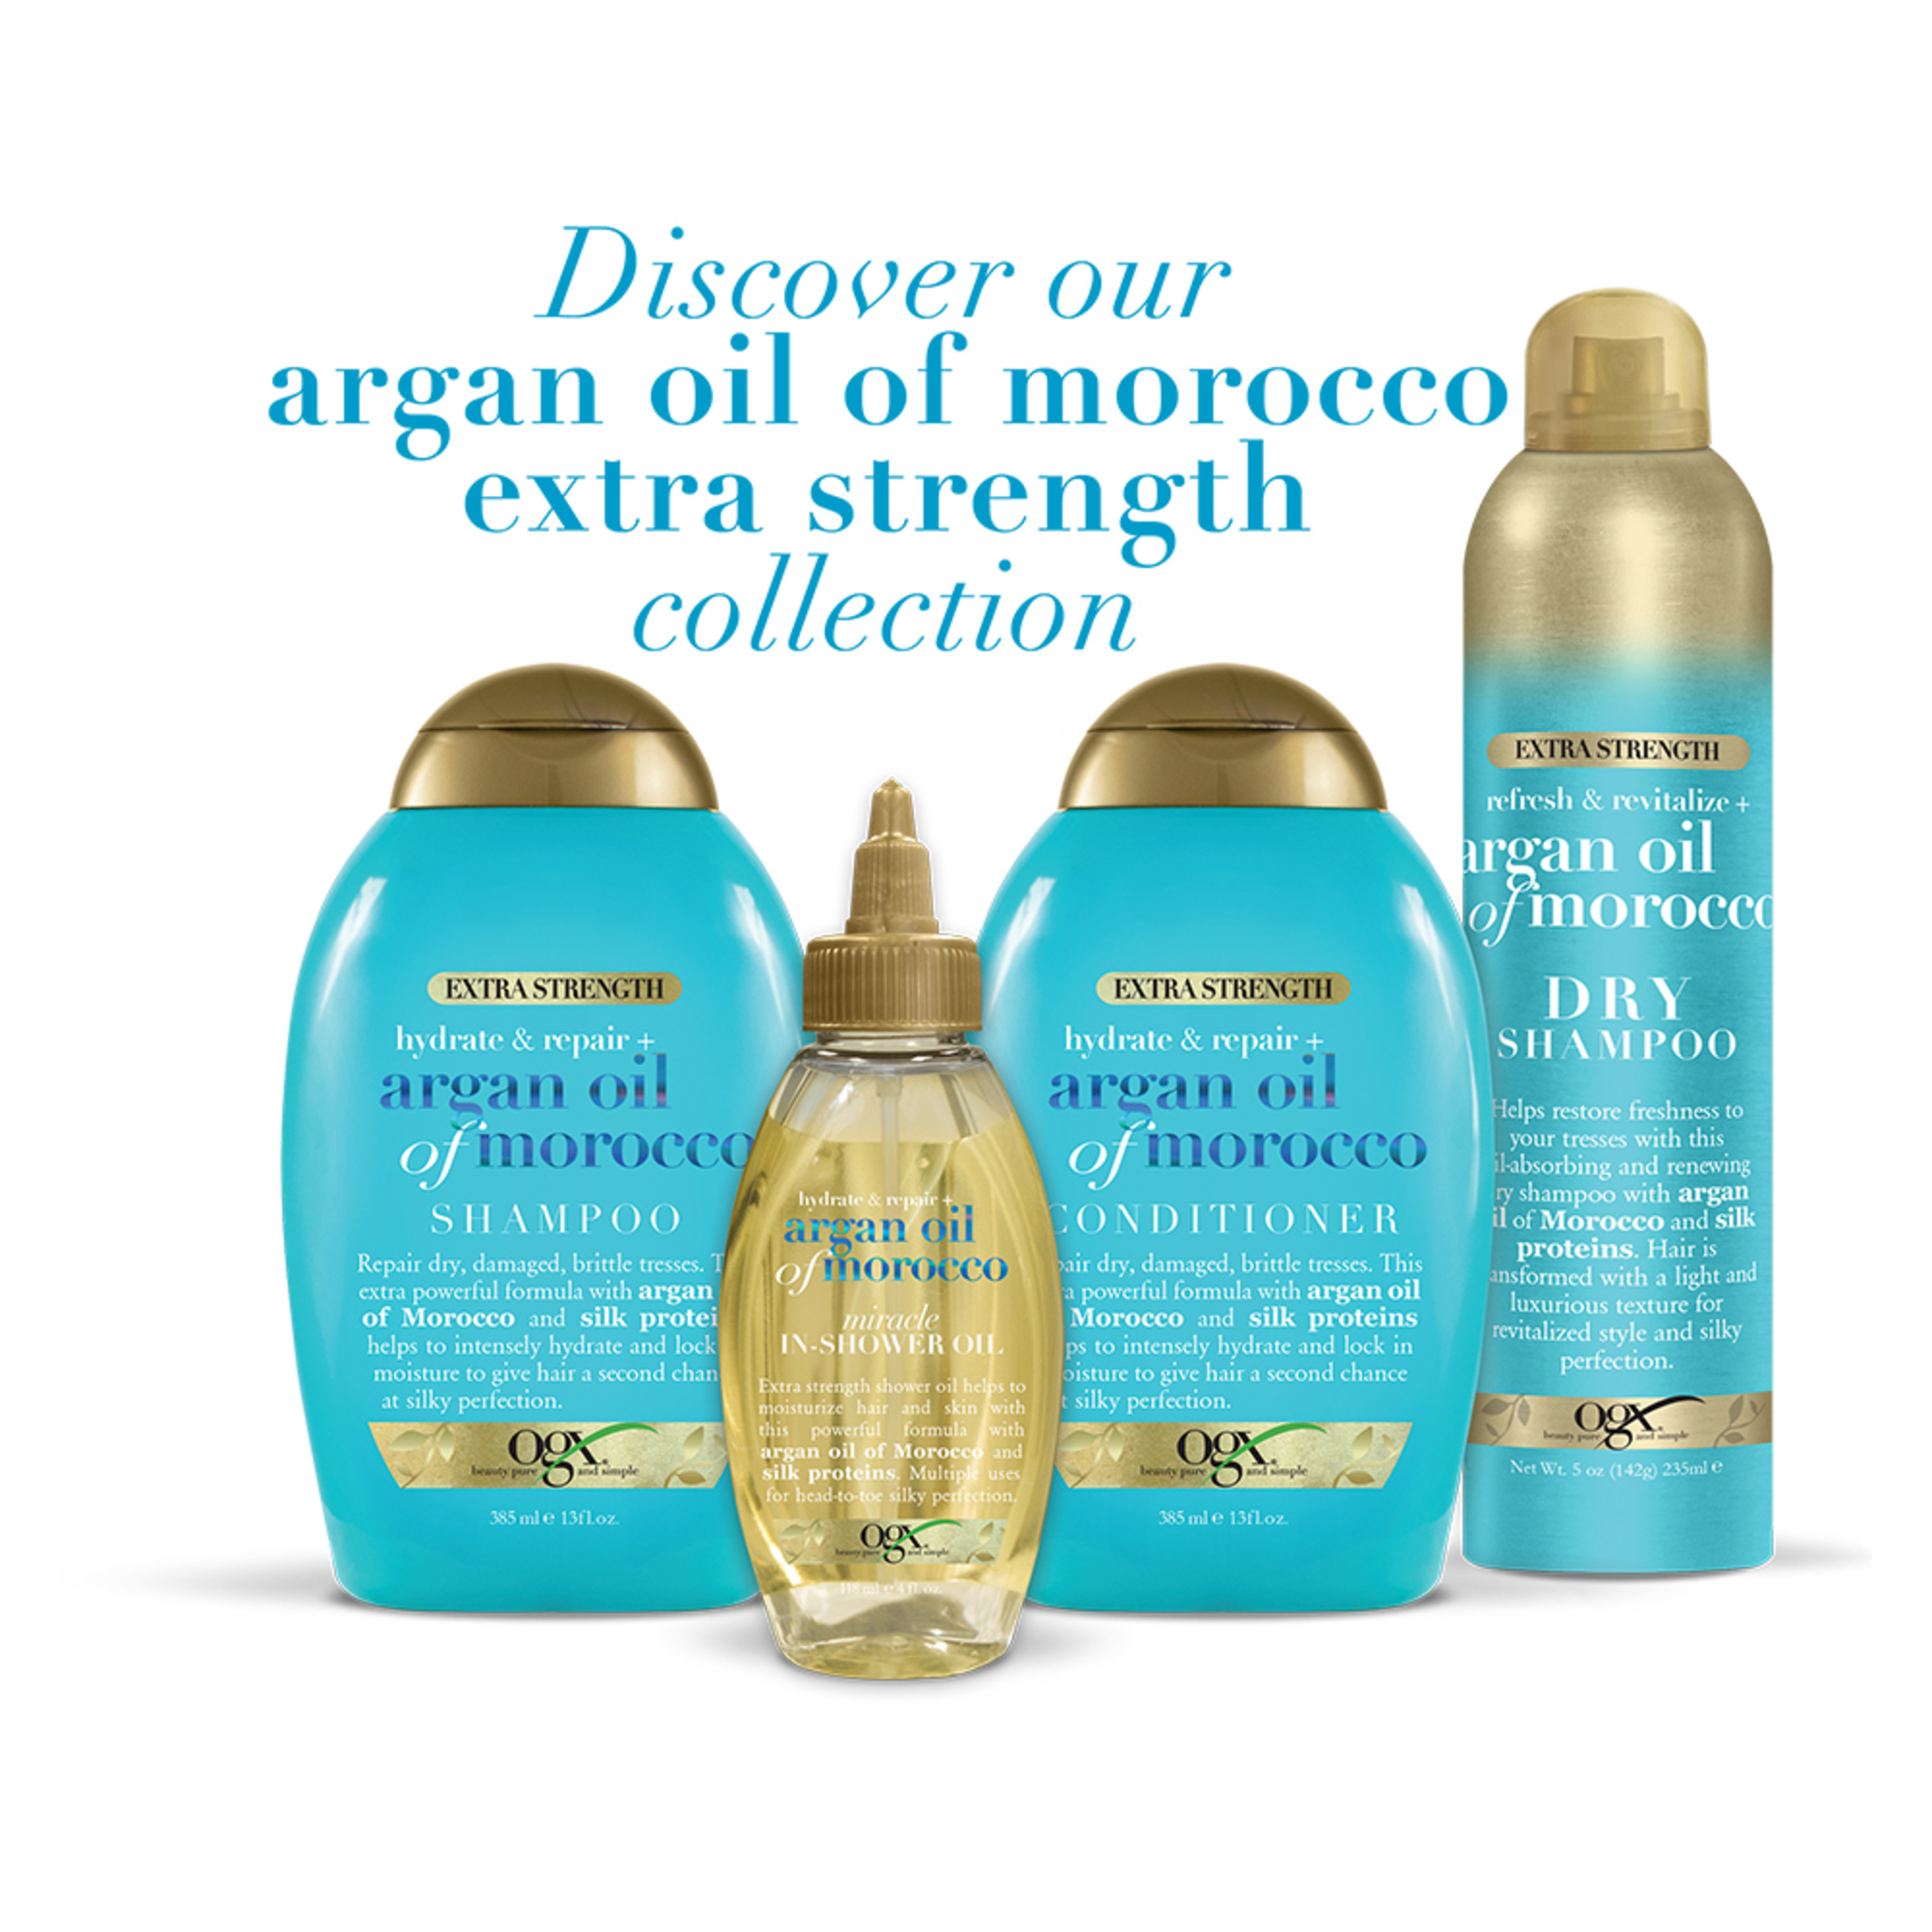 OGX Extra Strength Refresh & Revitalize + Argan Oil of Morocco Dry Shampoo 5 oz - image 4 of 5